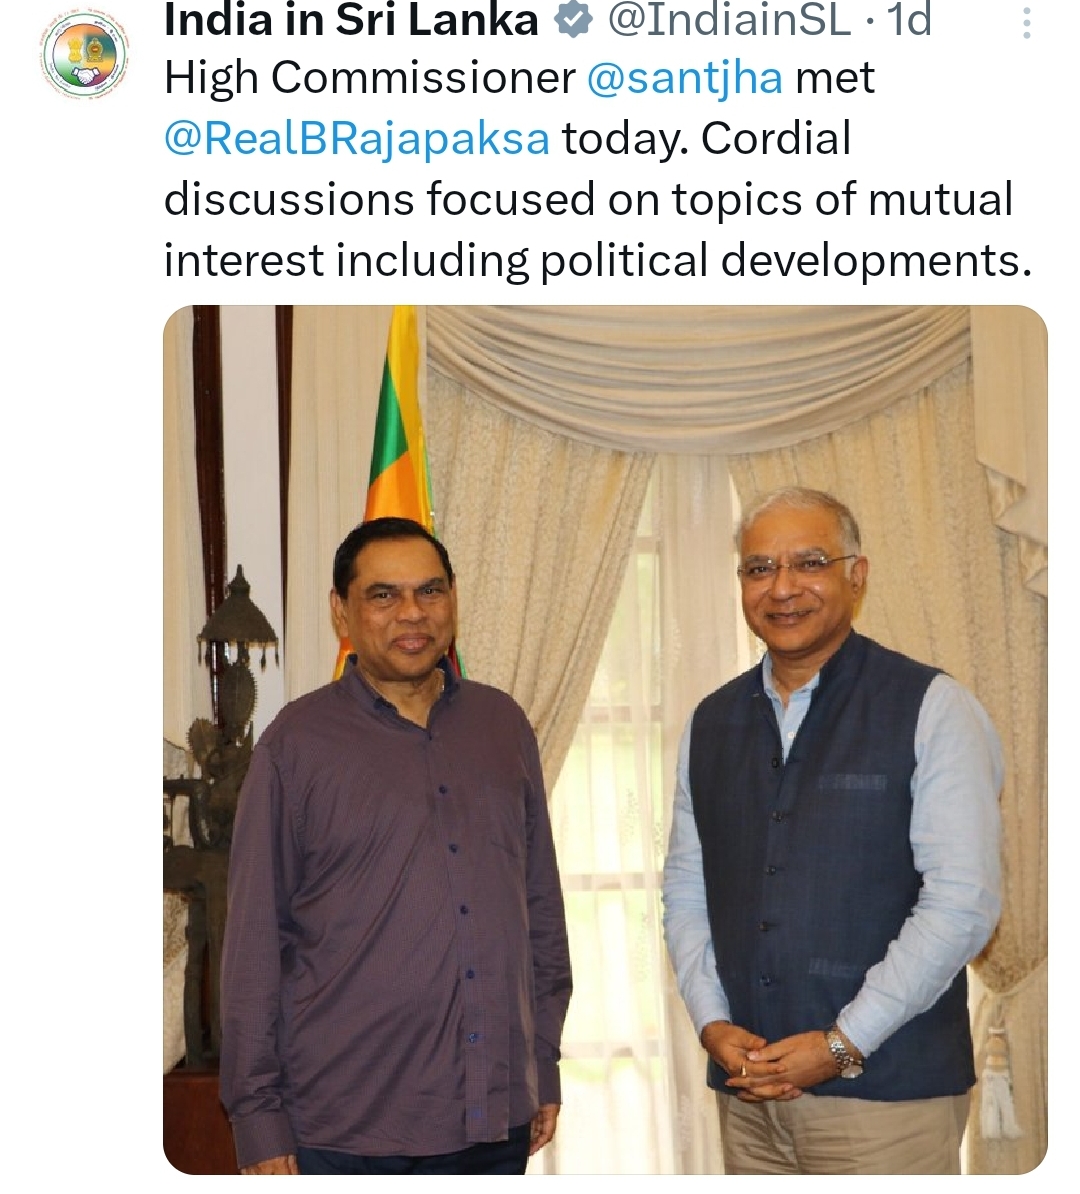 Indian HC meets Basil Rajapaksa